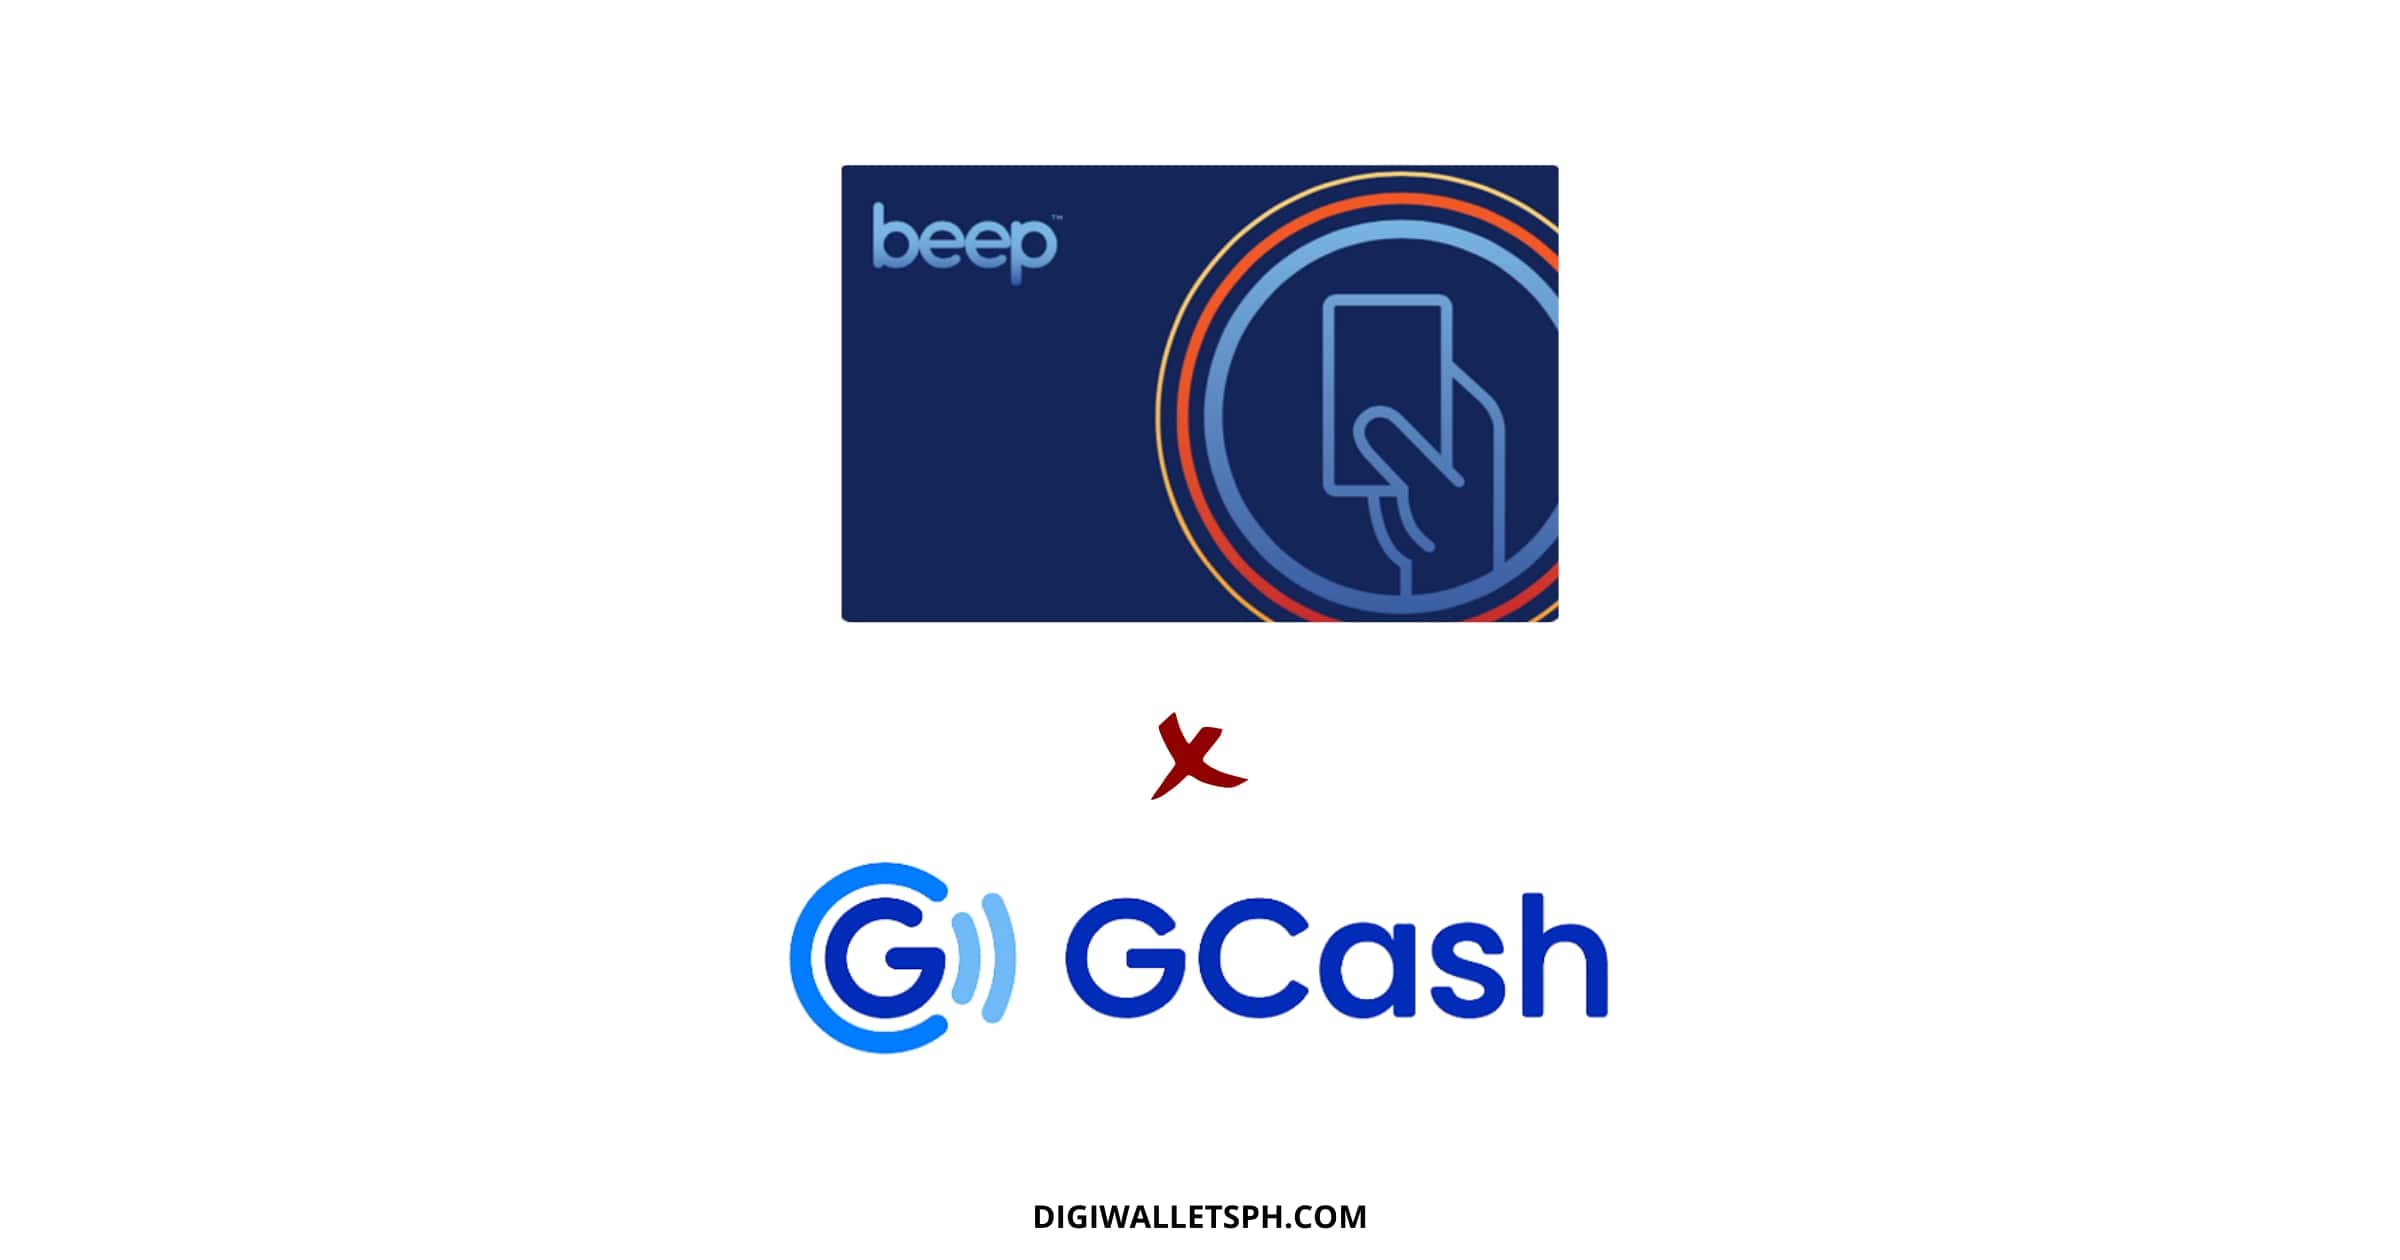 How to load Beep card using GCash